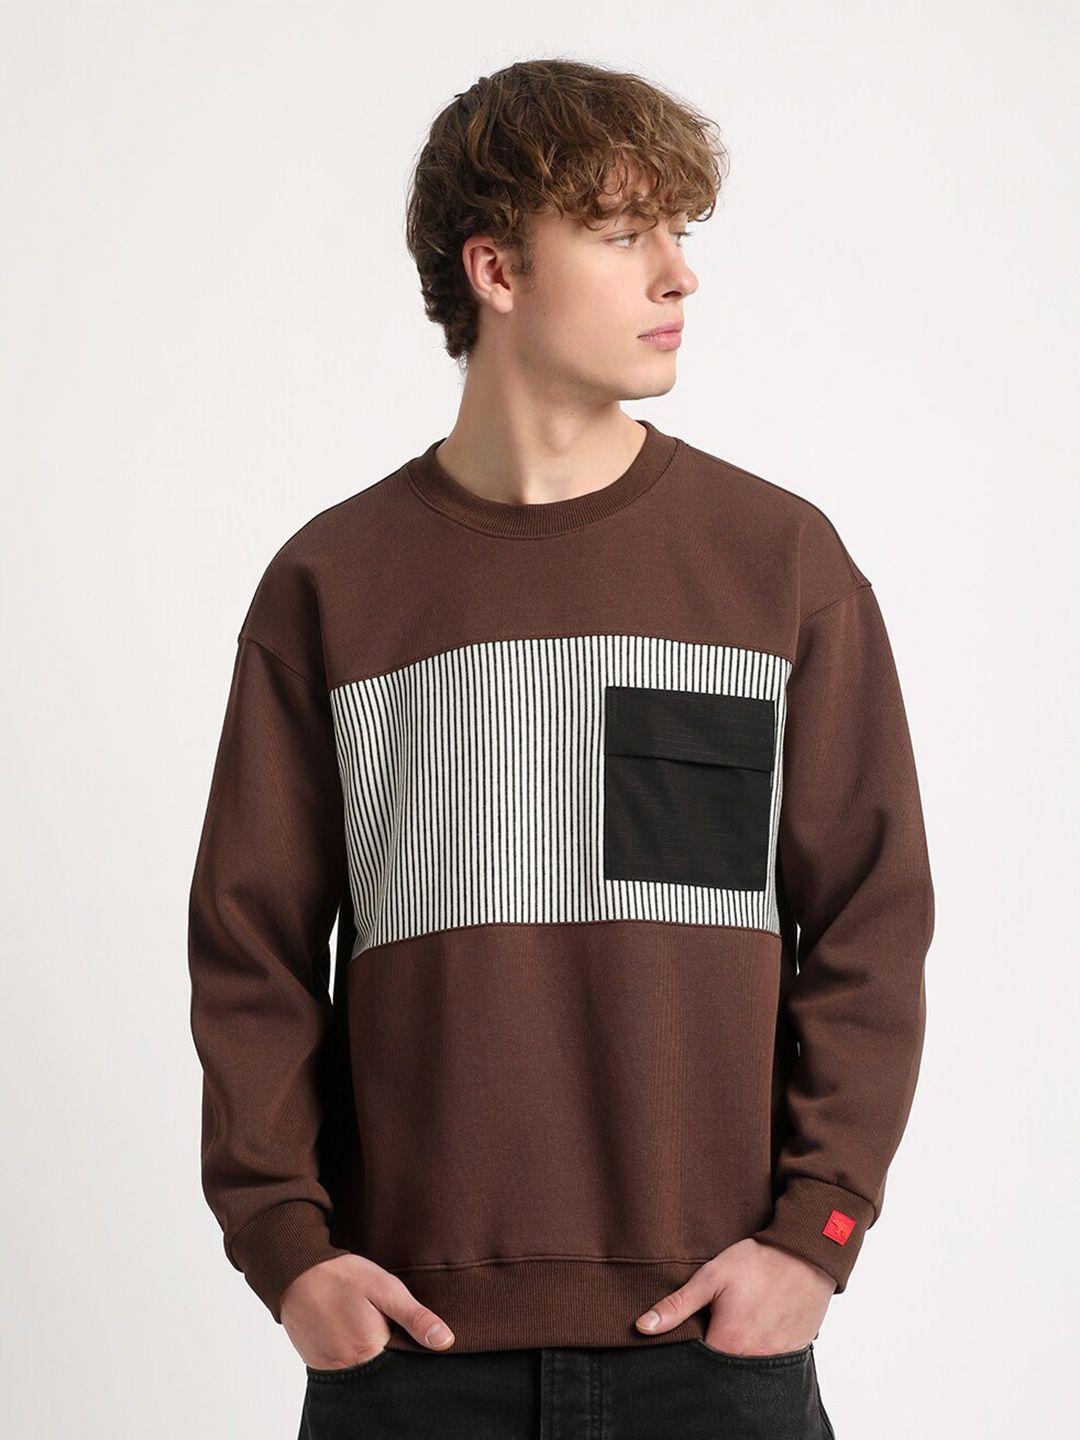 the-bear-house-men-brown-colourblocked-sweatshirt